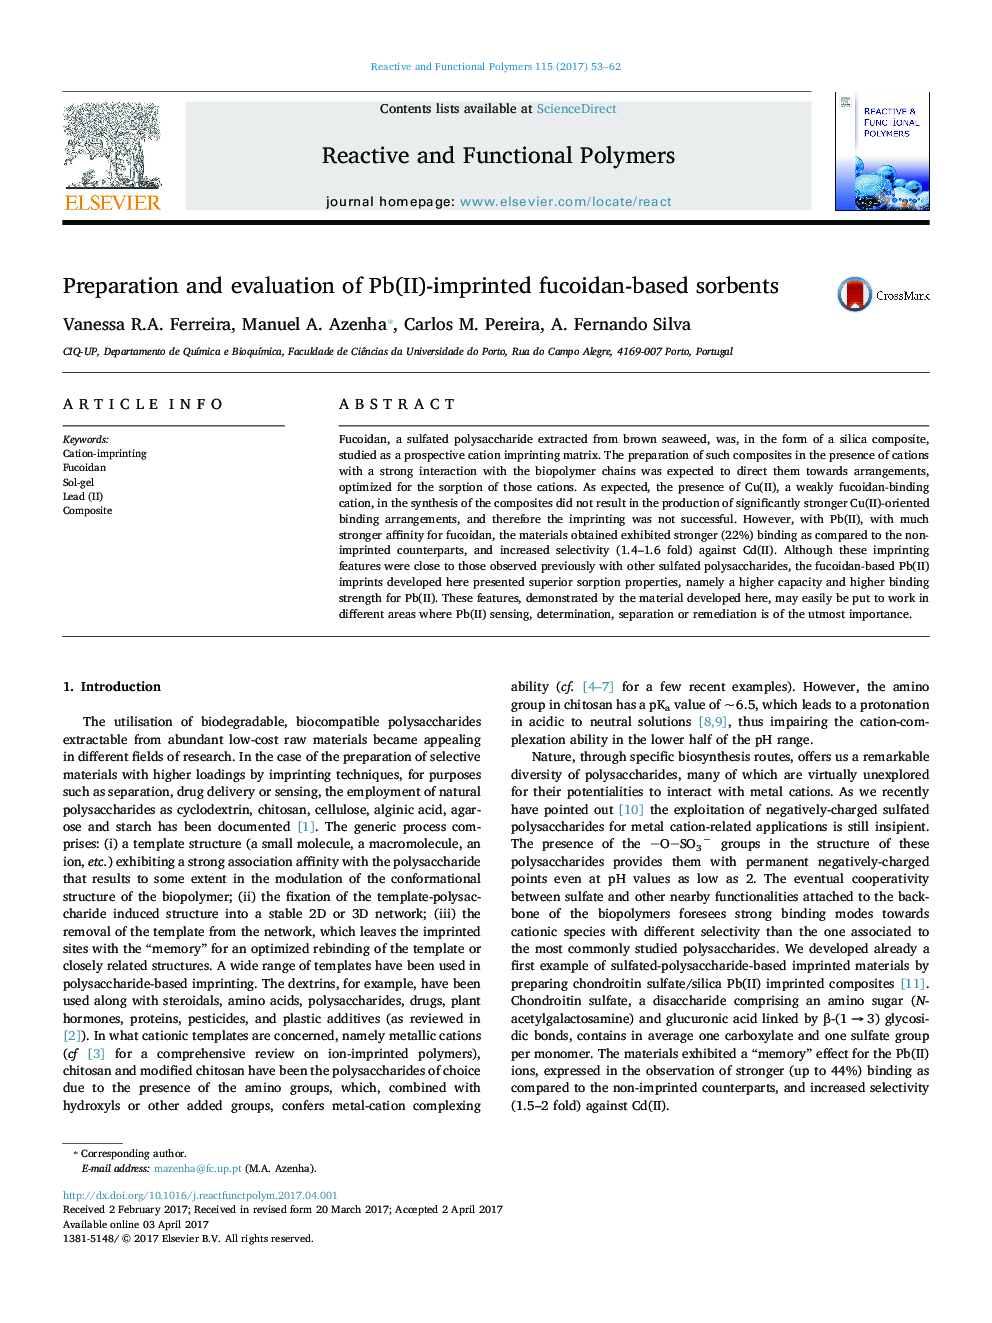 Preparation and evaluation of Pb(II)-imprinted fucoidan-based sorbents